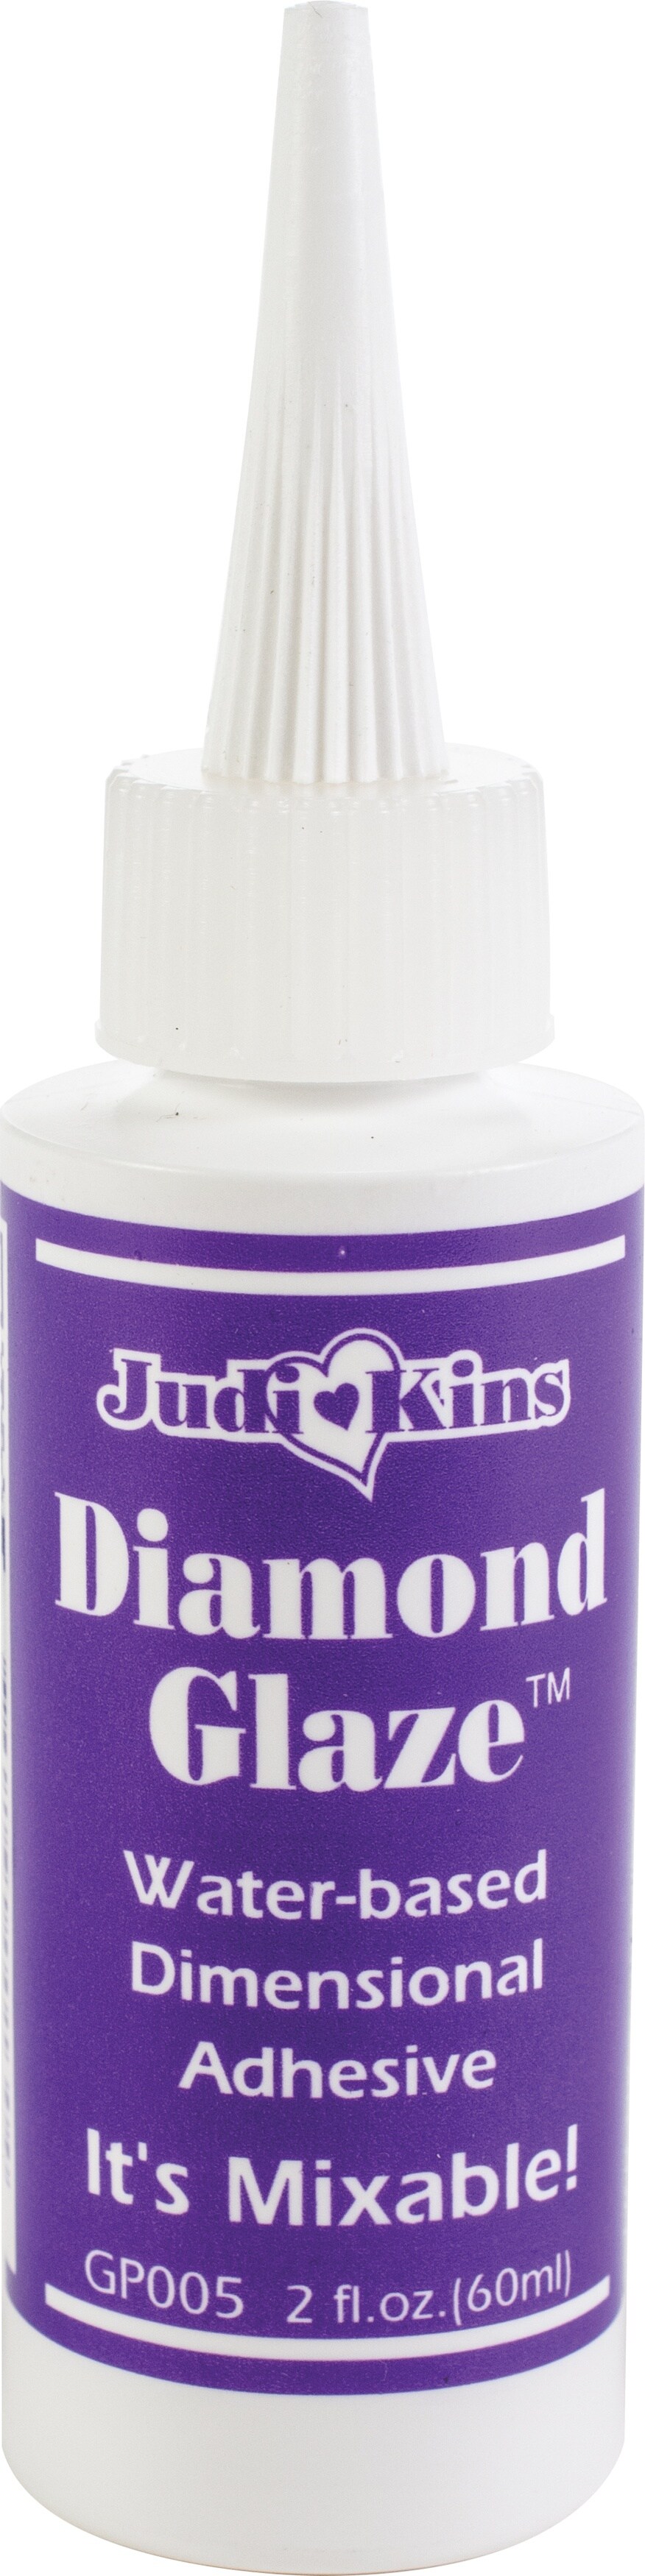 Multipack of 25 - Judikins Diamond Glaze Dimensional Adhesive 2oz-Precision  Tip